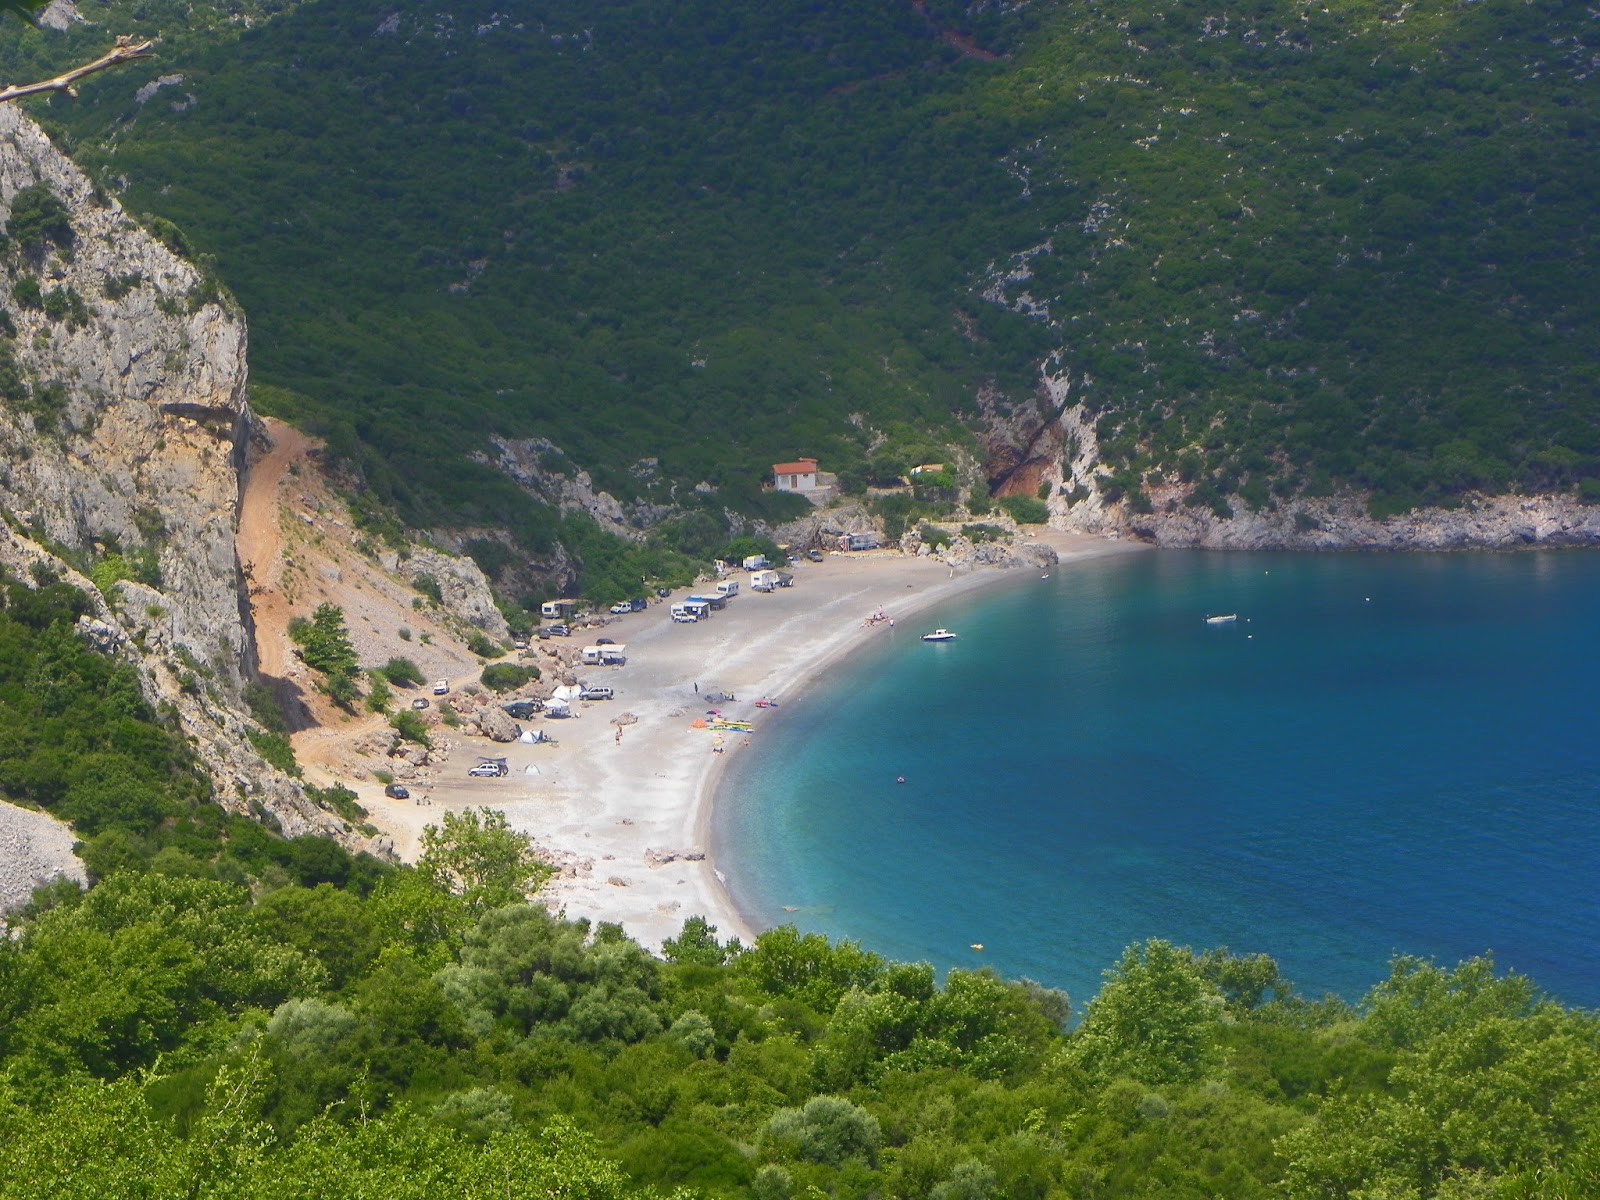 Photo of Tsilaros beach and its beautiful scenery